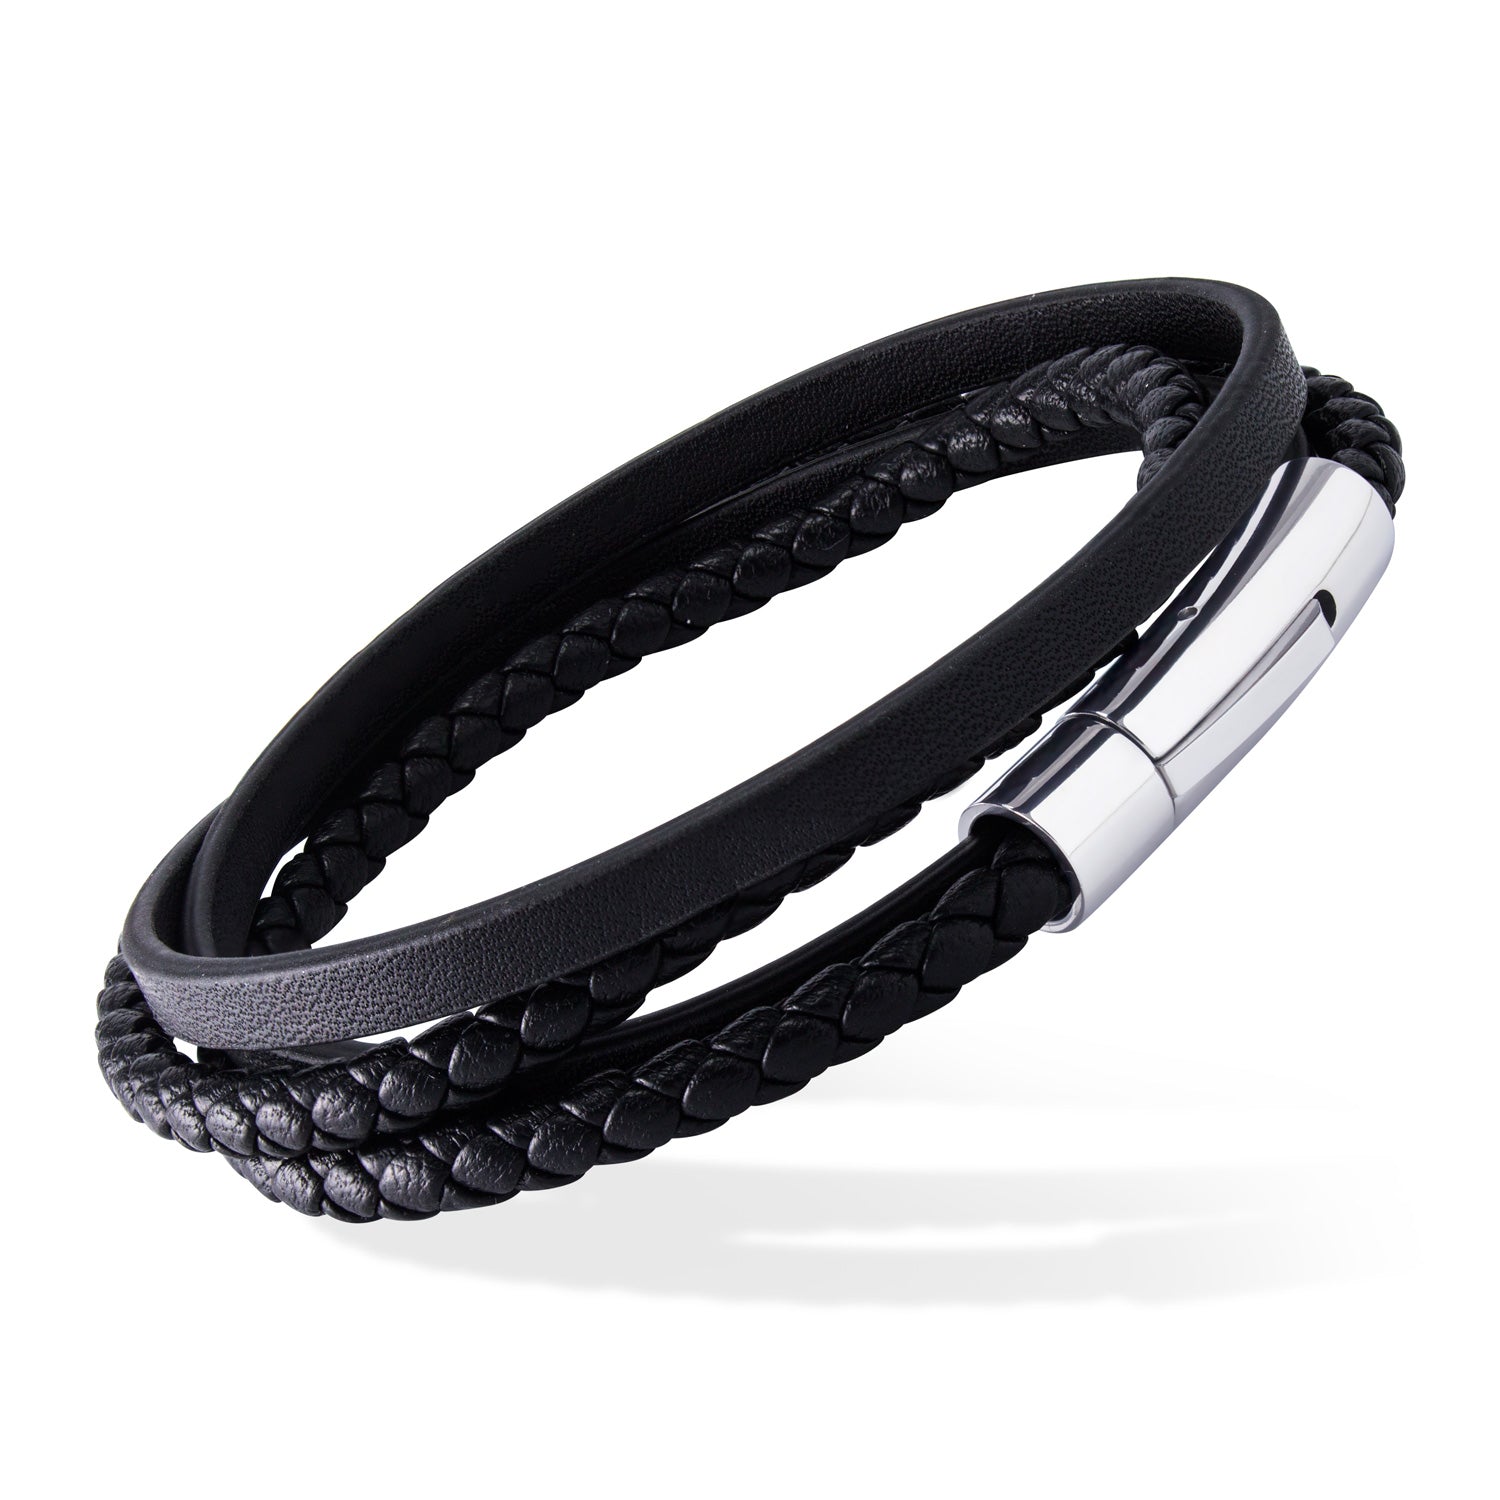 Men's Black Leather and Steel Braided Bracelet